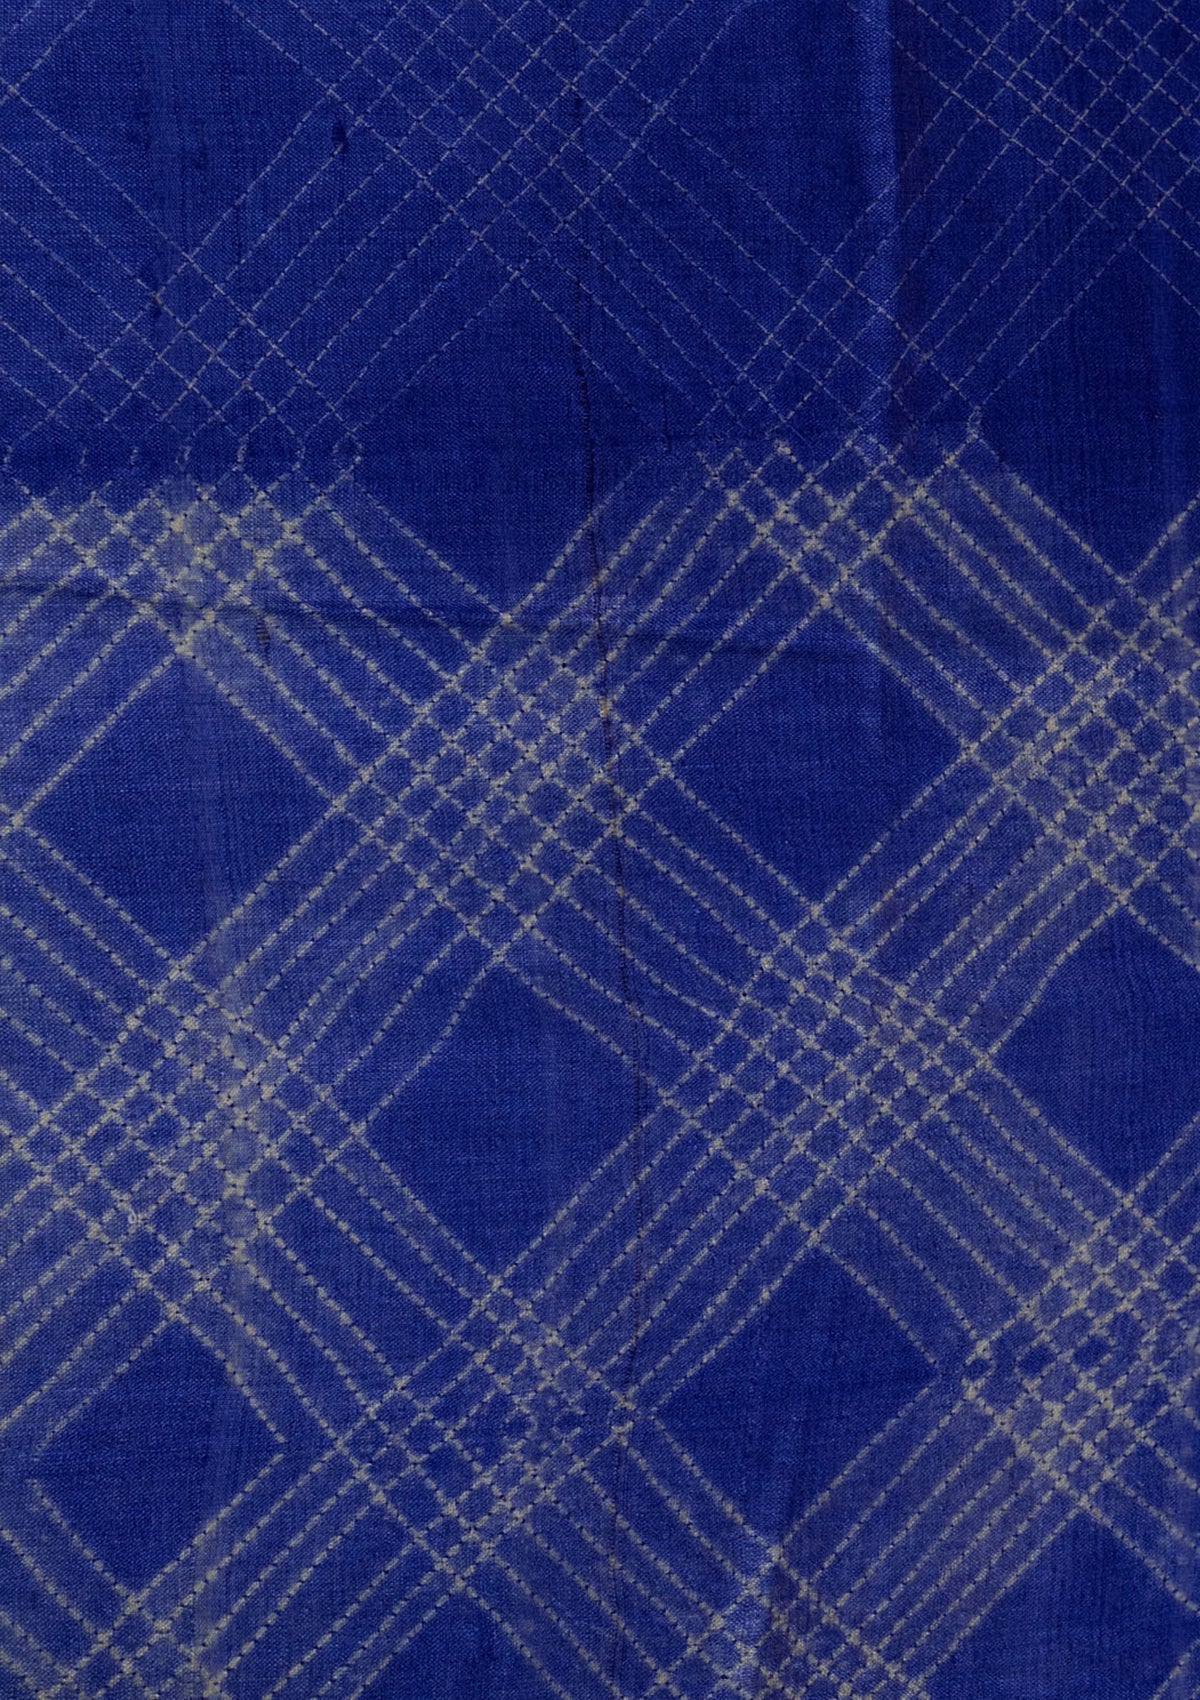 Handwoven Blue Shibori Fabric